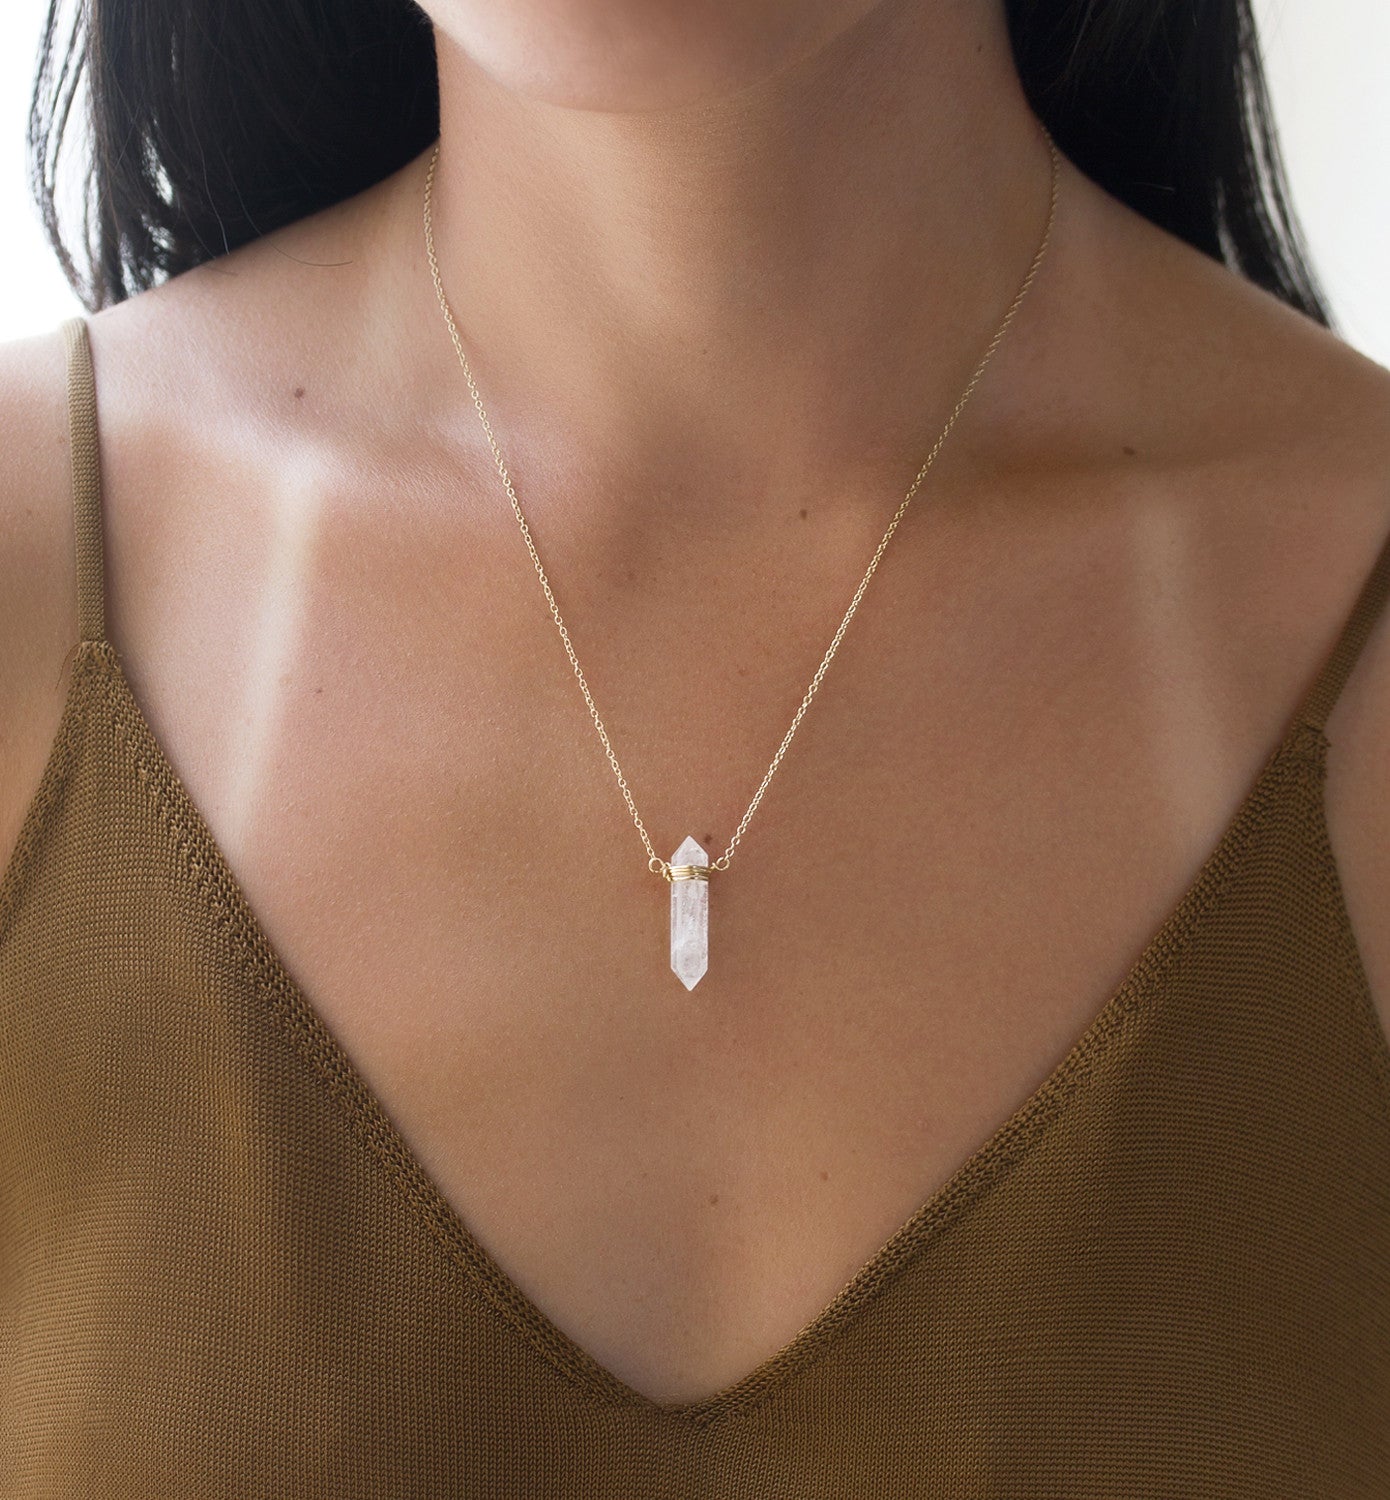 Yaomiao 3 Pieces Crystal Necklaces, Quartz Pendant Energy Healing